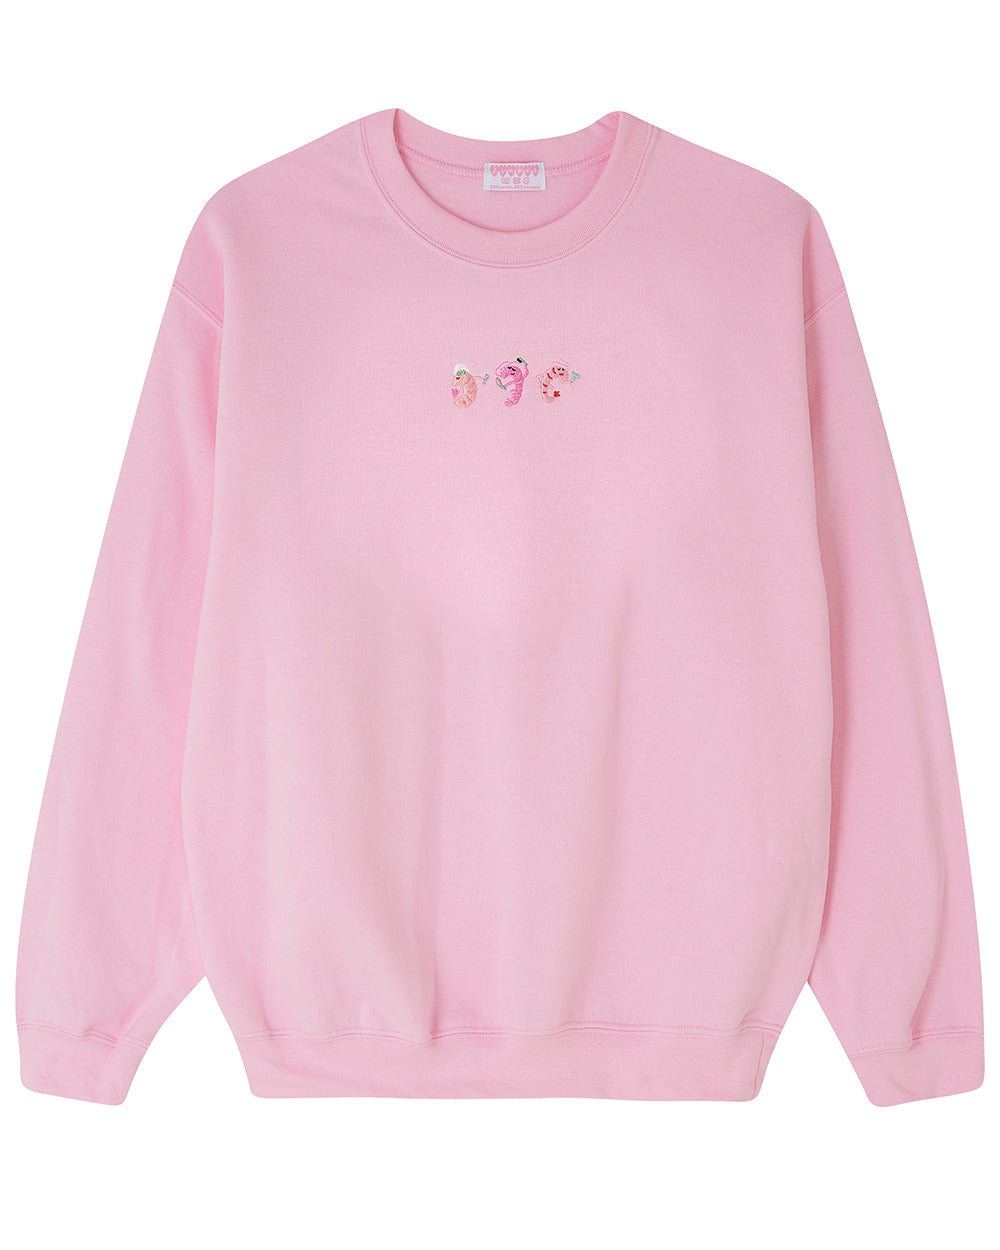 Self Care Shrimps Embroidered Sweatshirt